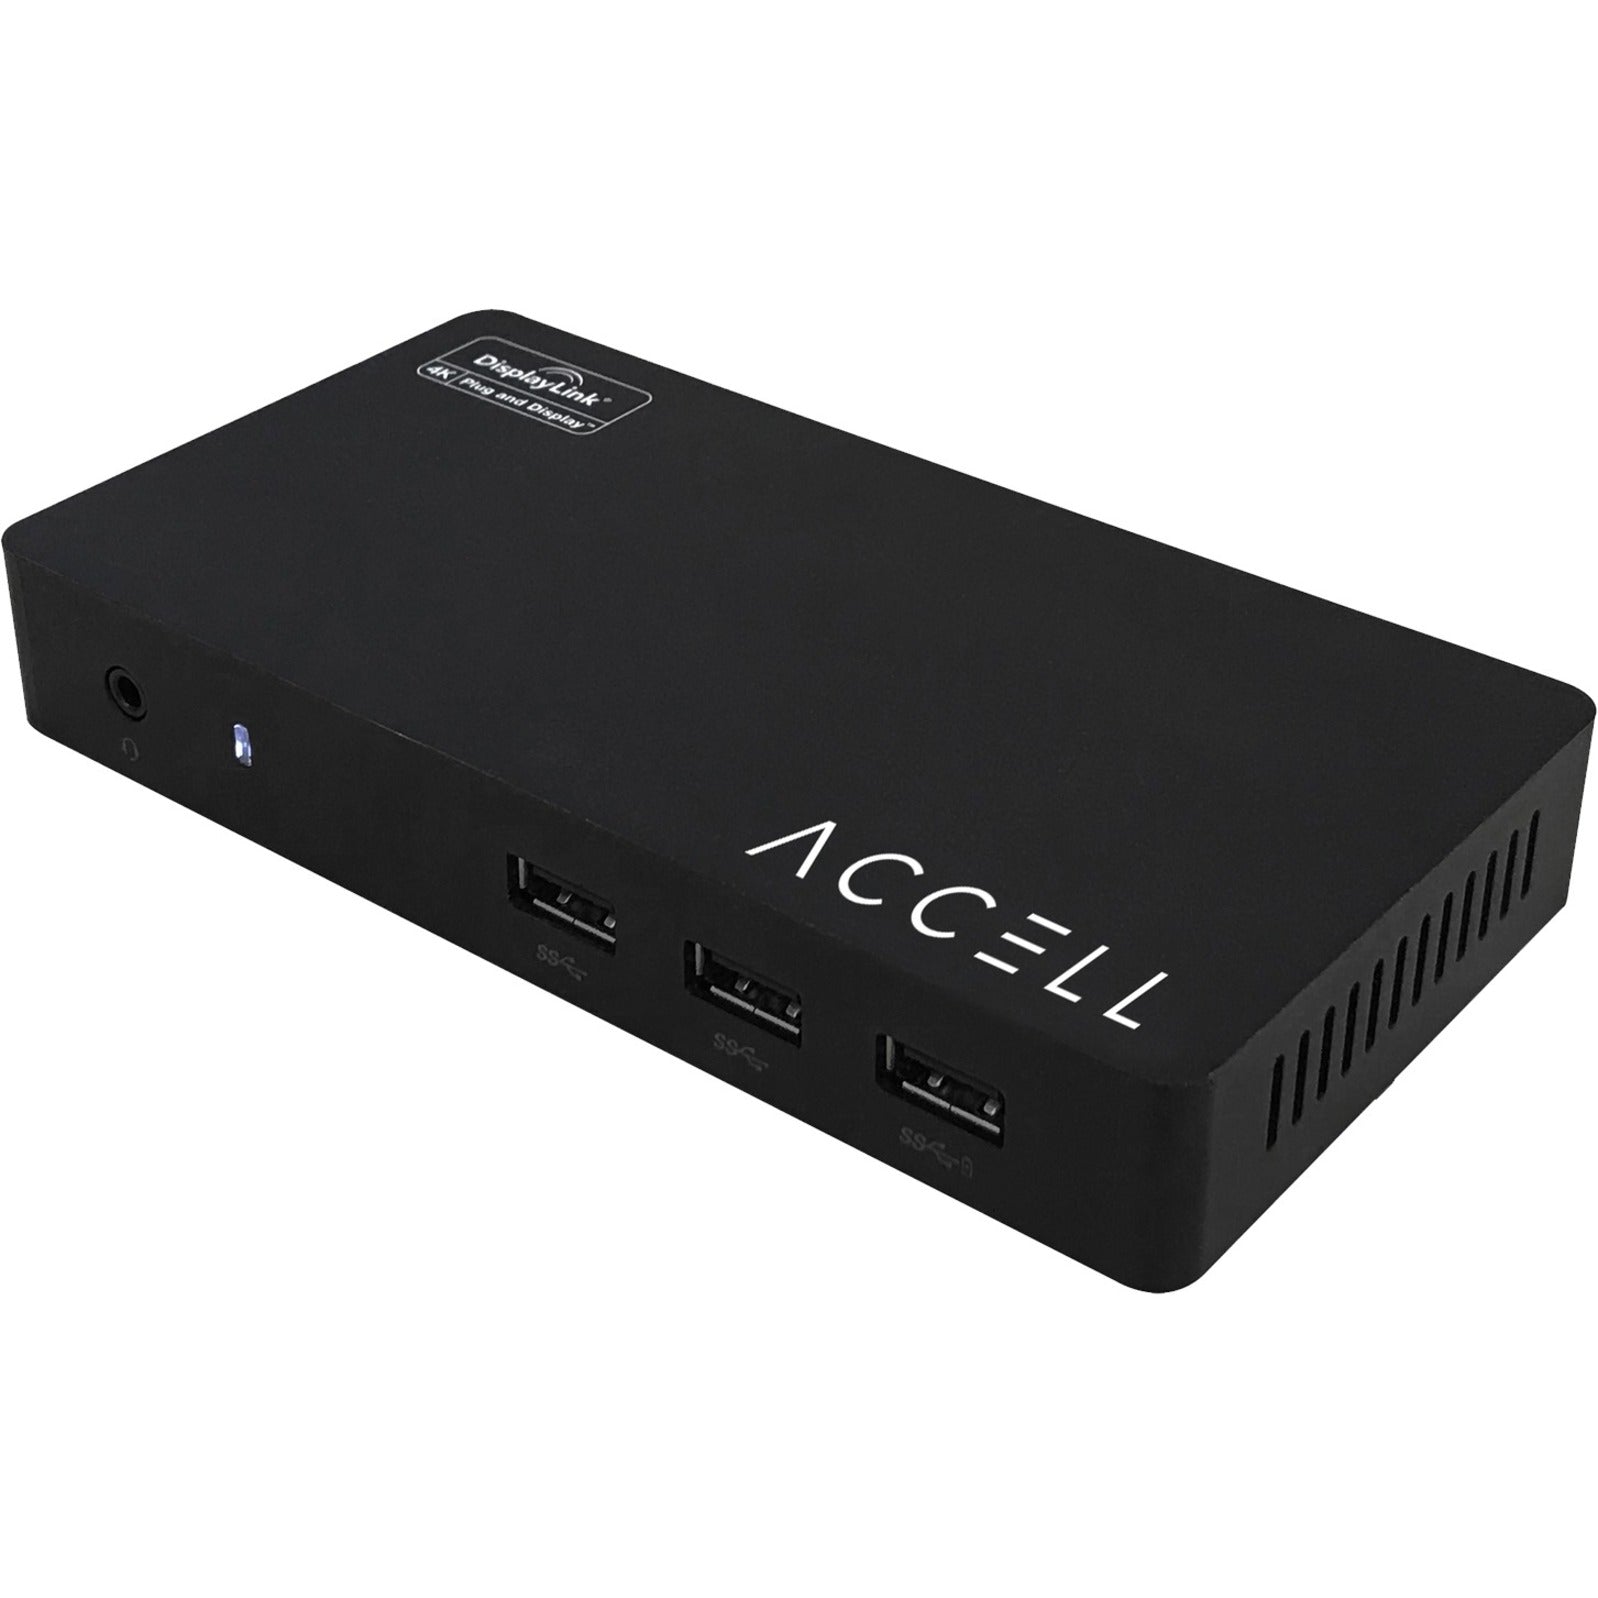 Accell K172B-002B USB 3.0 Full Function Docking Station, HDMI, DisplayPort, USB 3.0 Ports, RJ-45, Microphone